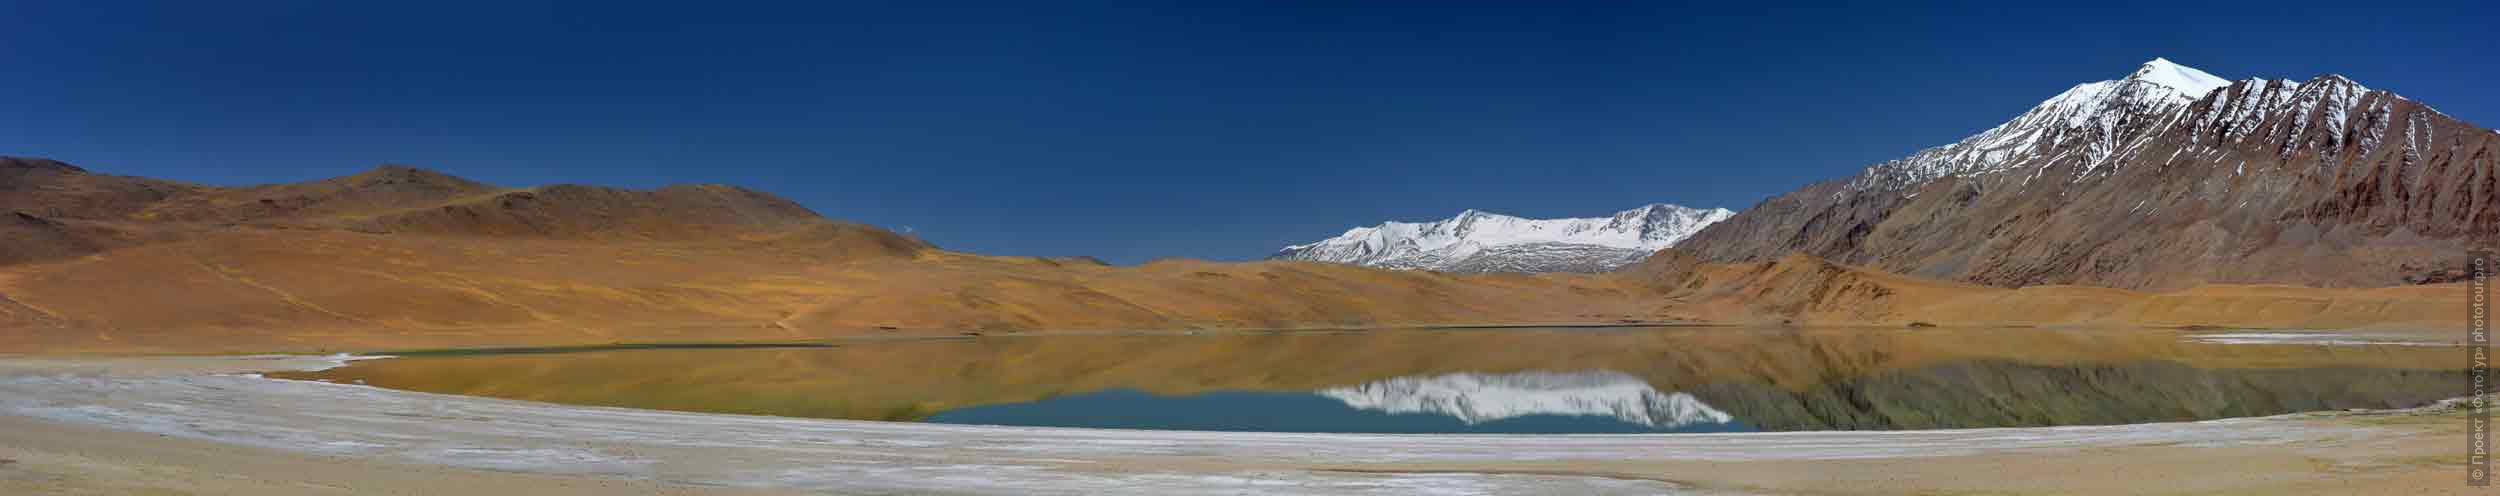 Lake Kagyar Tso, Ladakh womens tour, August 31 - September 14, 2019.